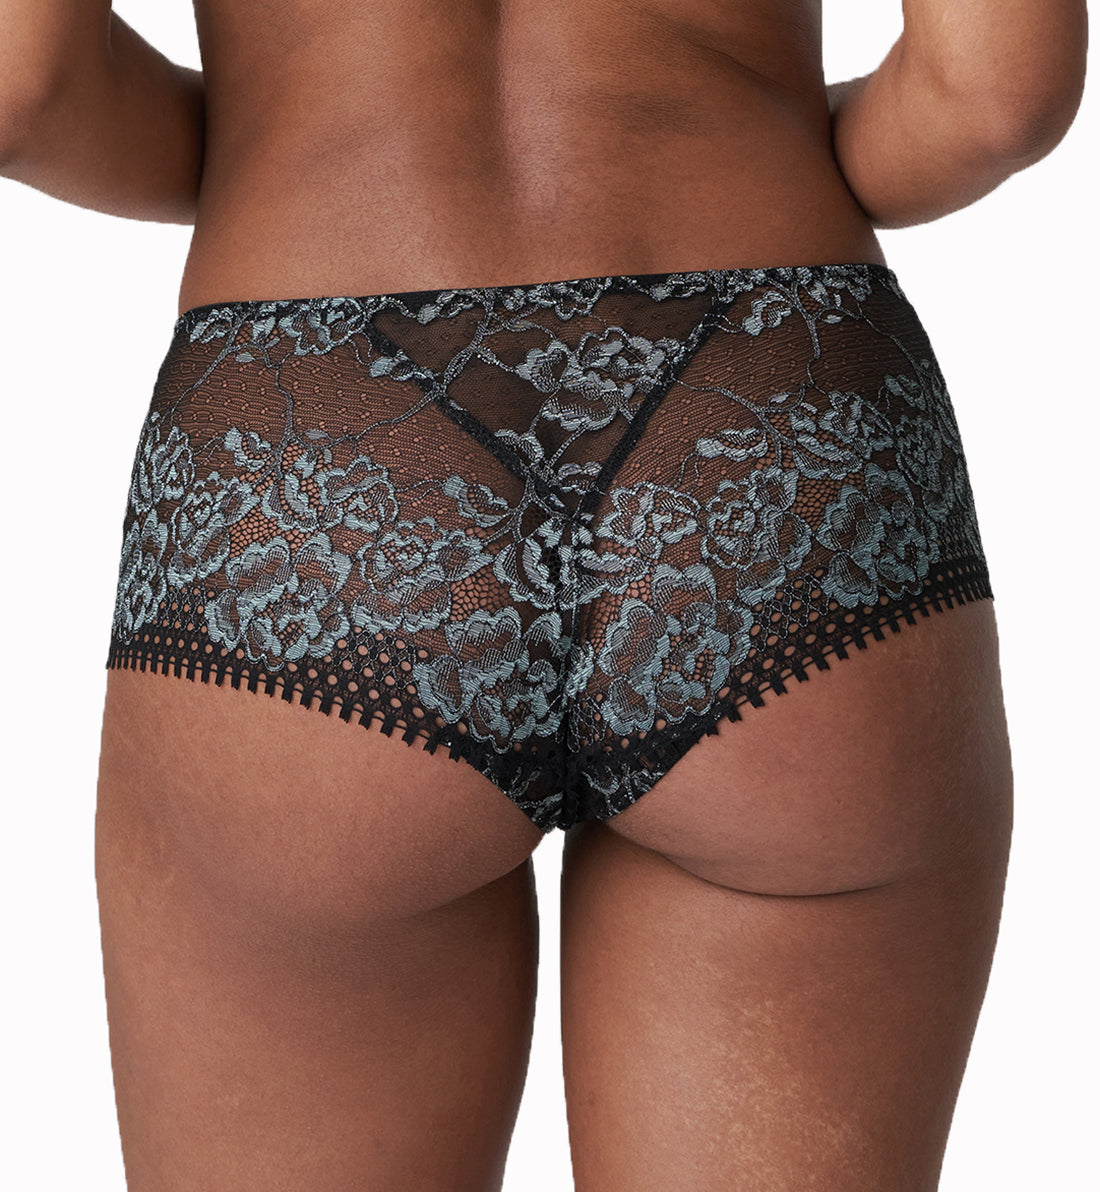 PrimaDonna Twist Rose Sauvage Matching Hotpants Panty (0542082),Medium,Black - Black,Medium